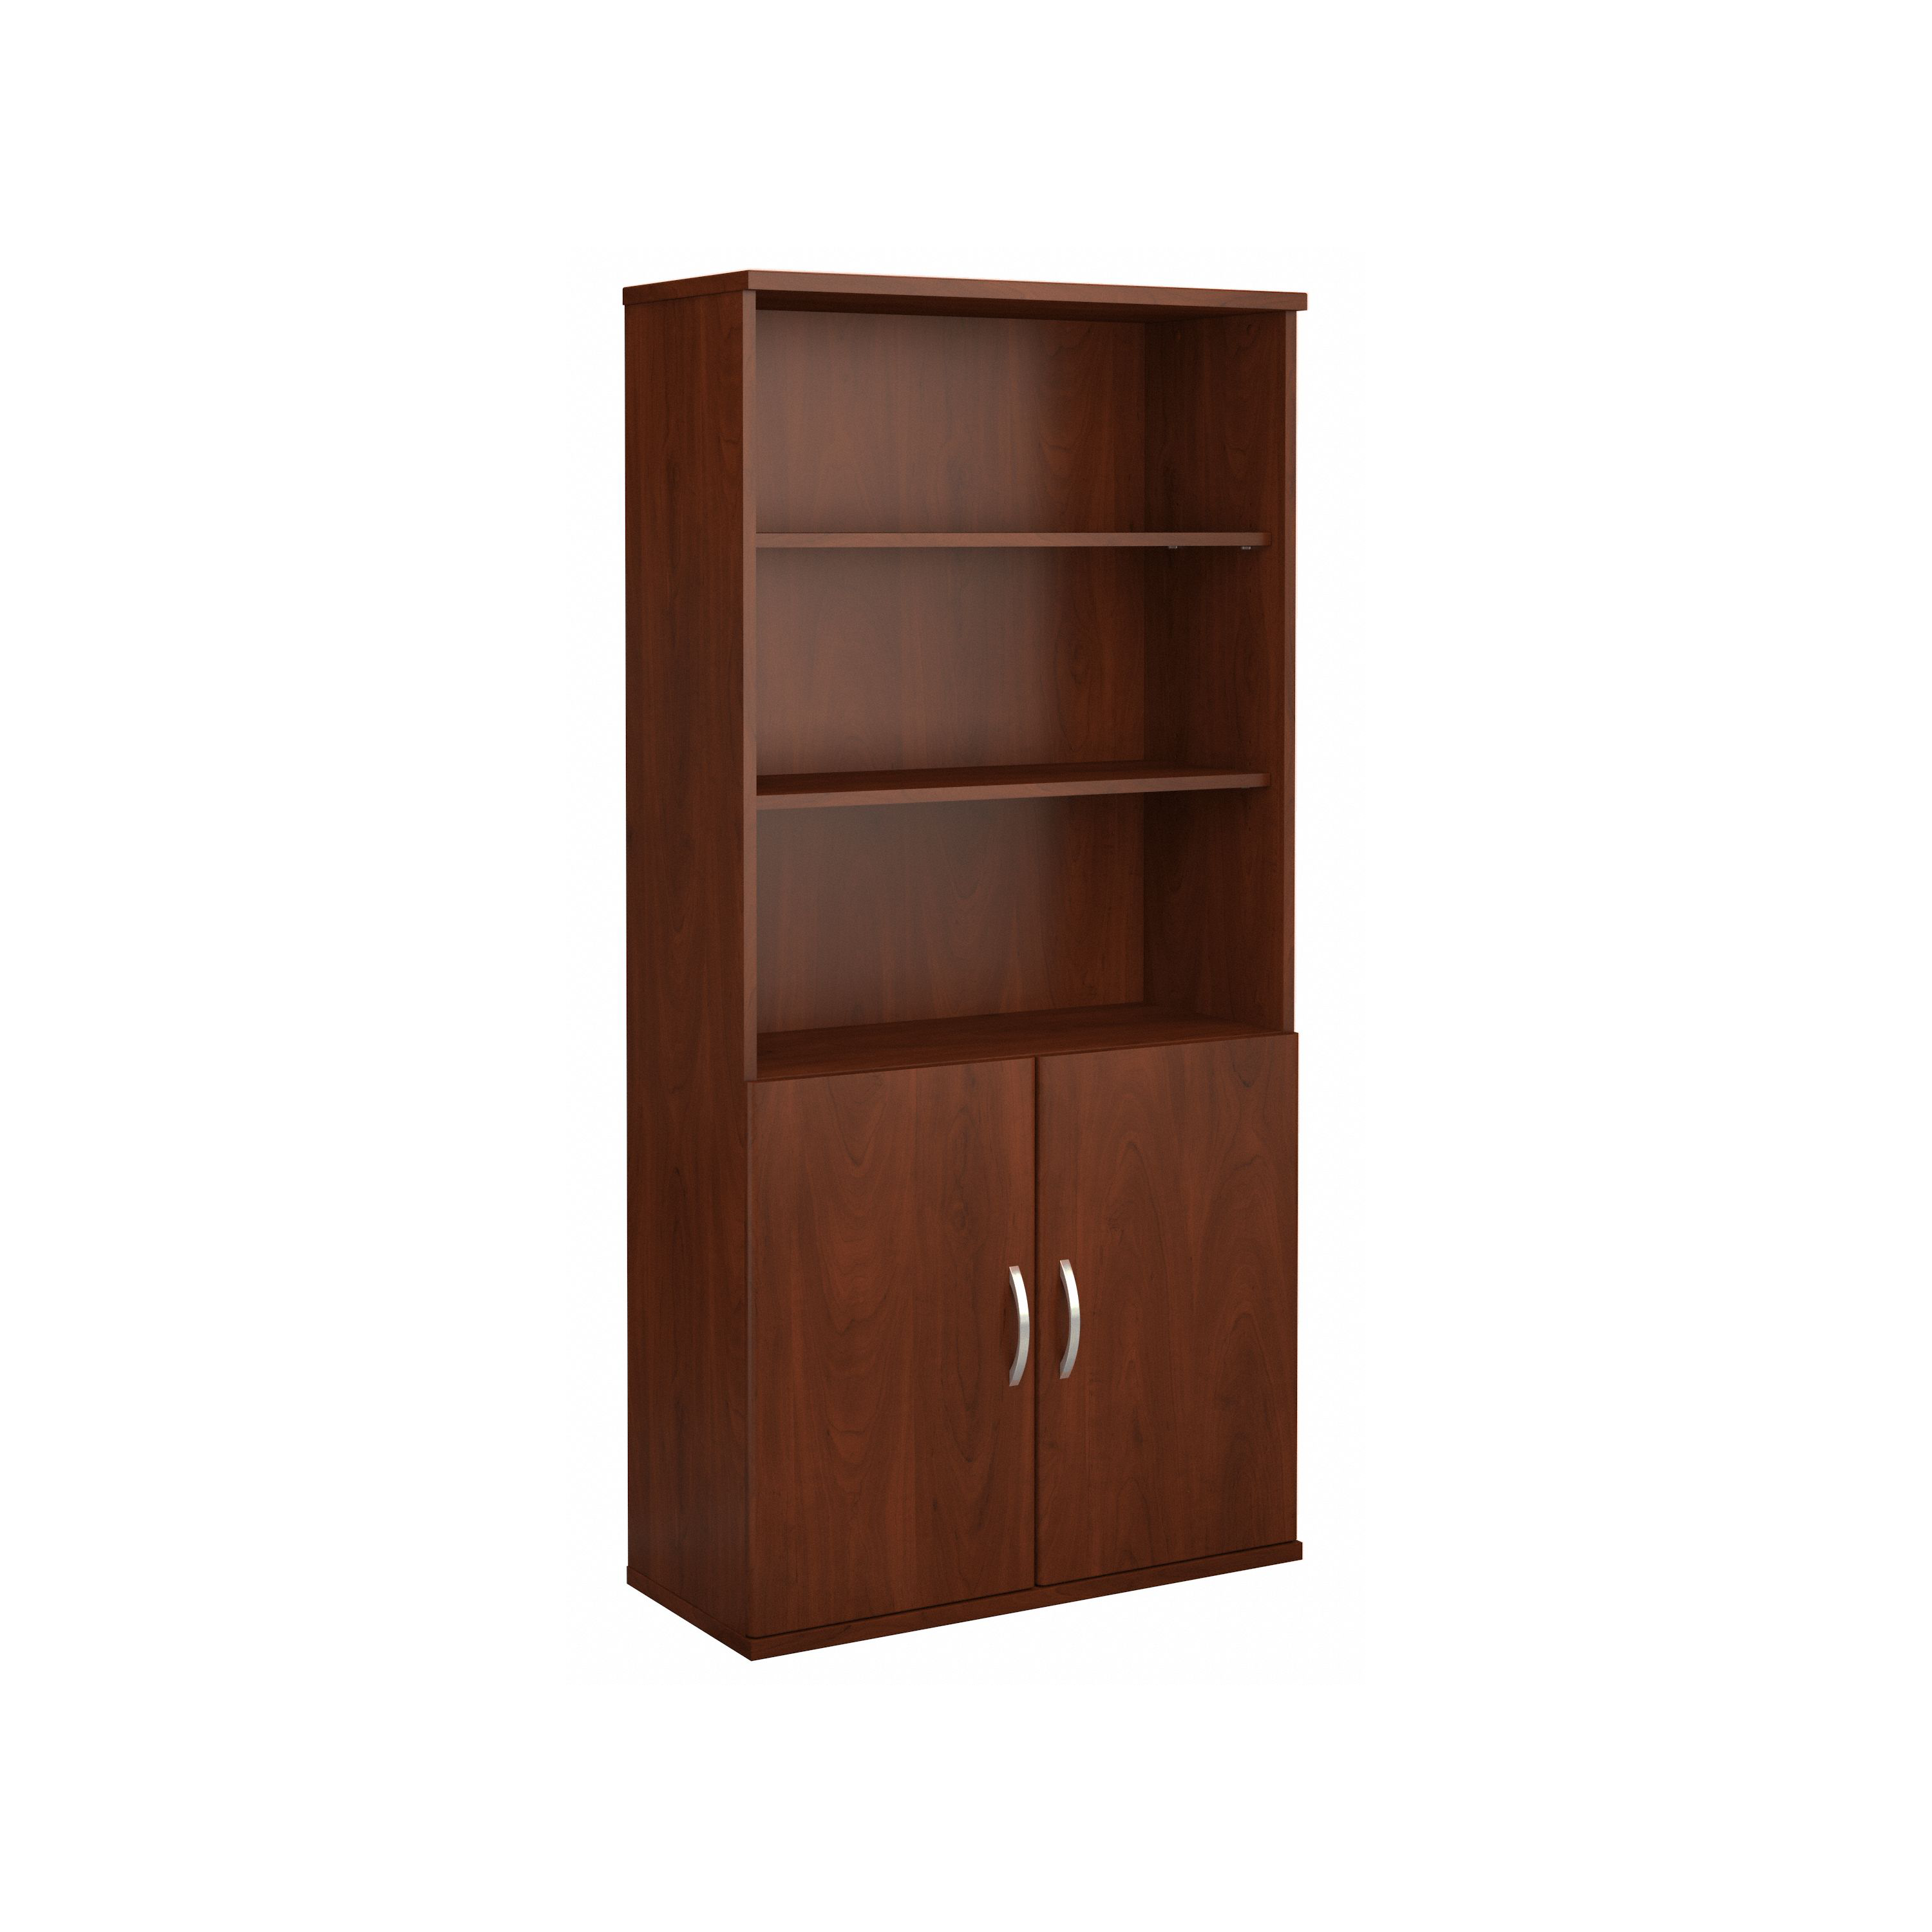 Shop Bush Business Furniture Series C 36W 5 Shelf Bookcase with Doors 02 SRC103HC #color_hansen cherry/graphite gray